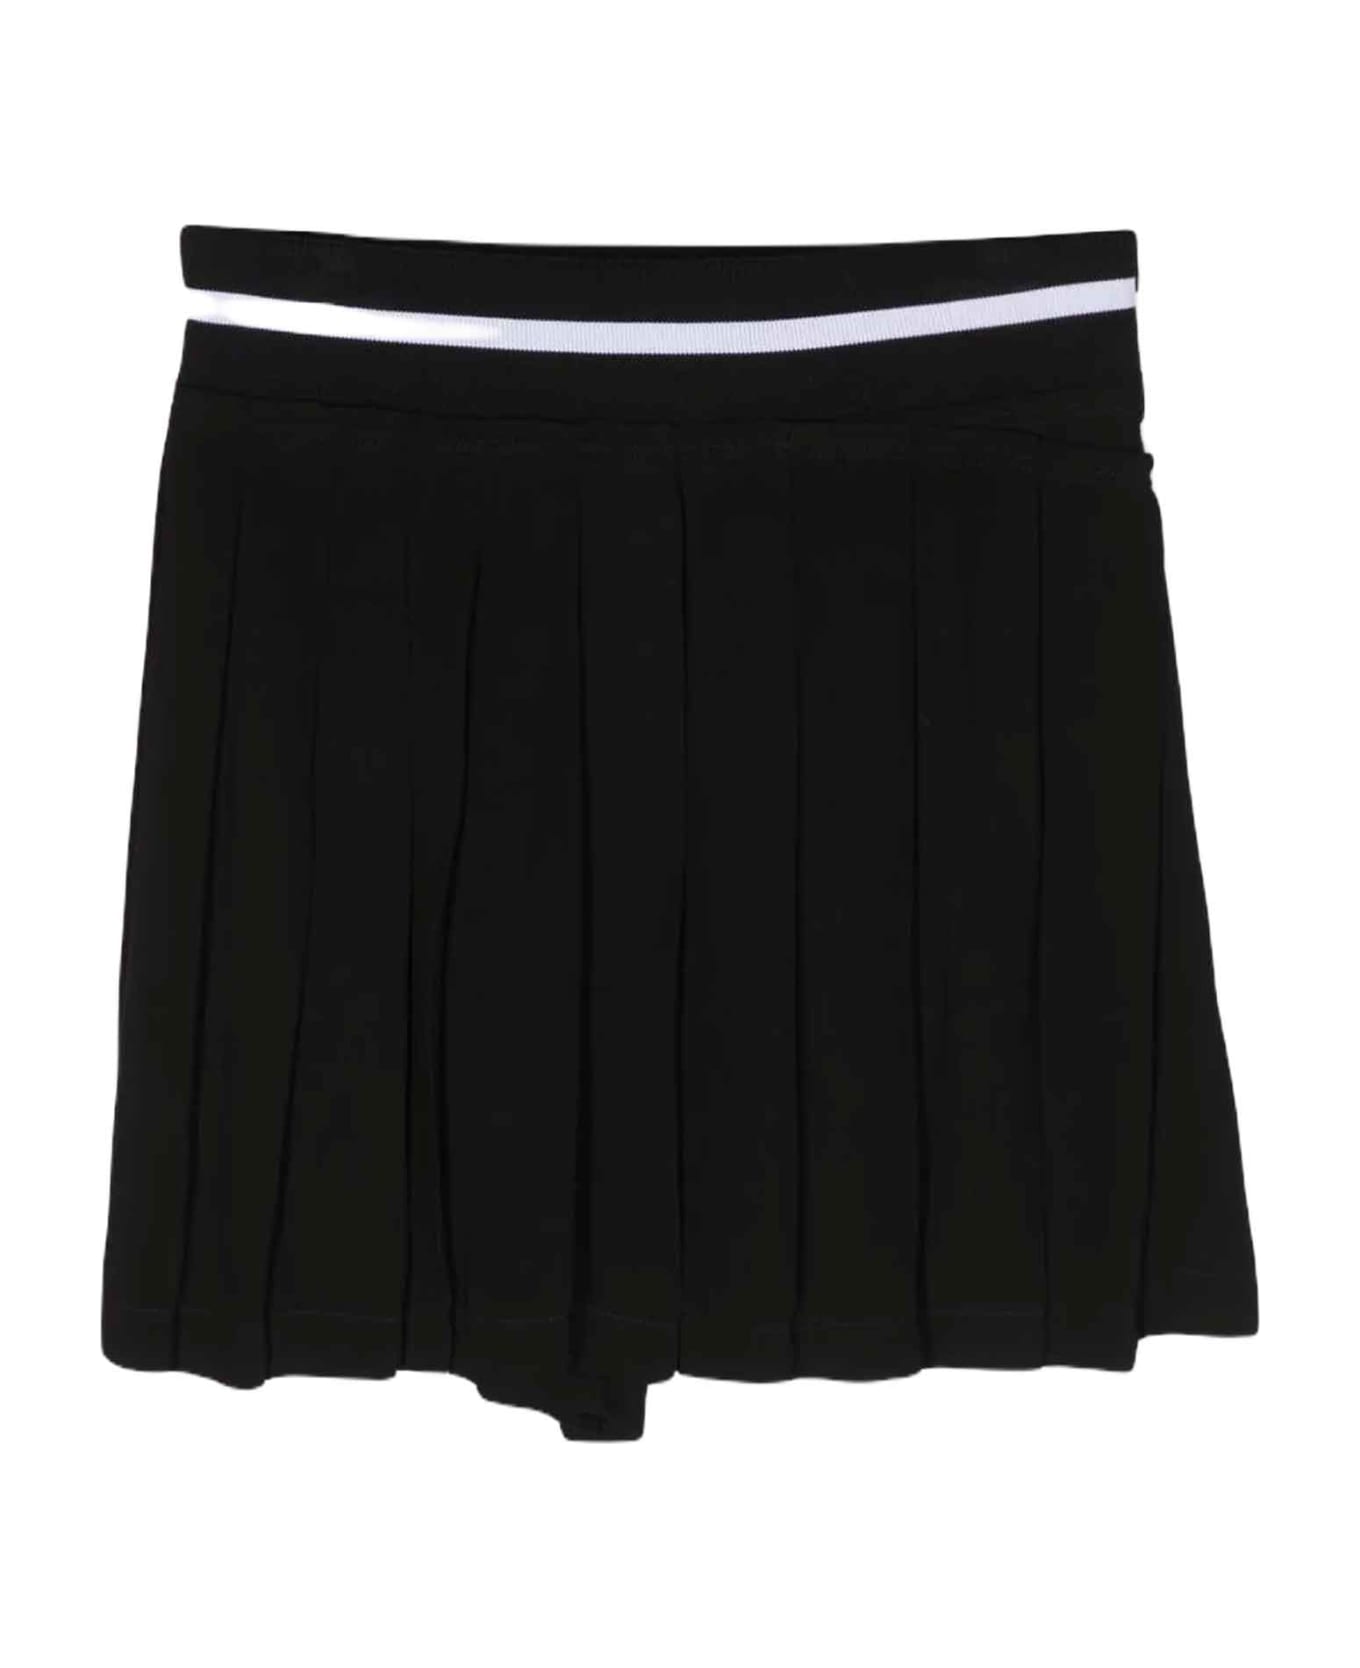 N.21 Black Skirt Girl Nº21 Kids - Nero